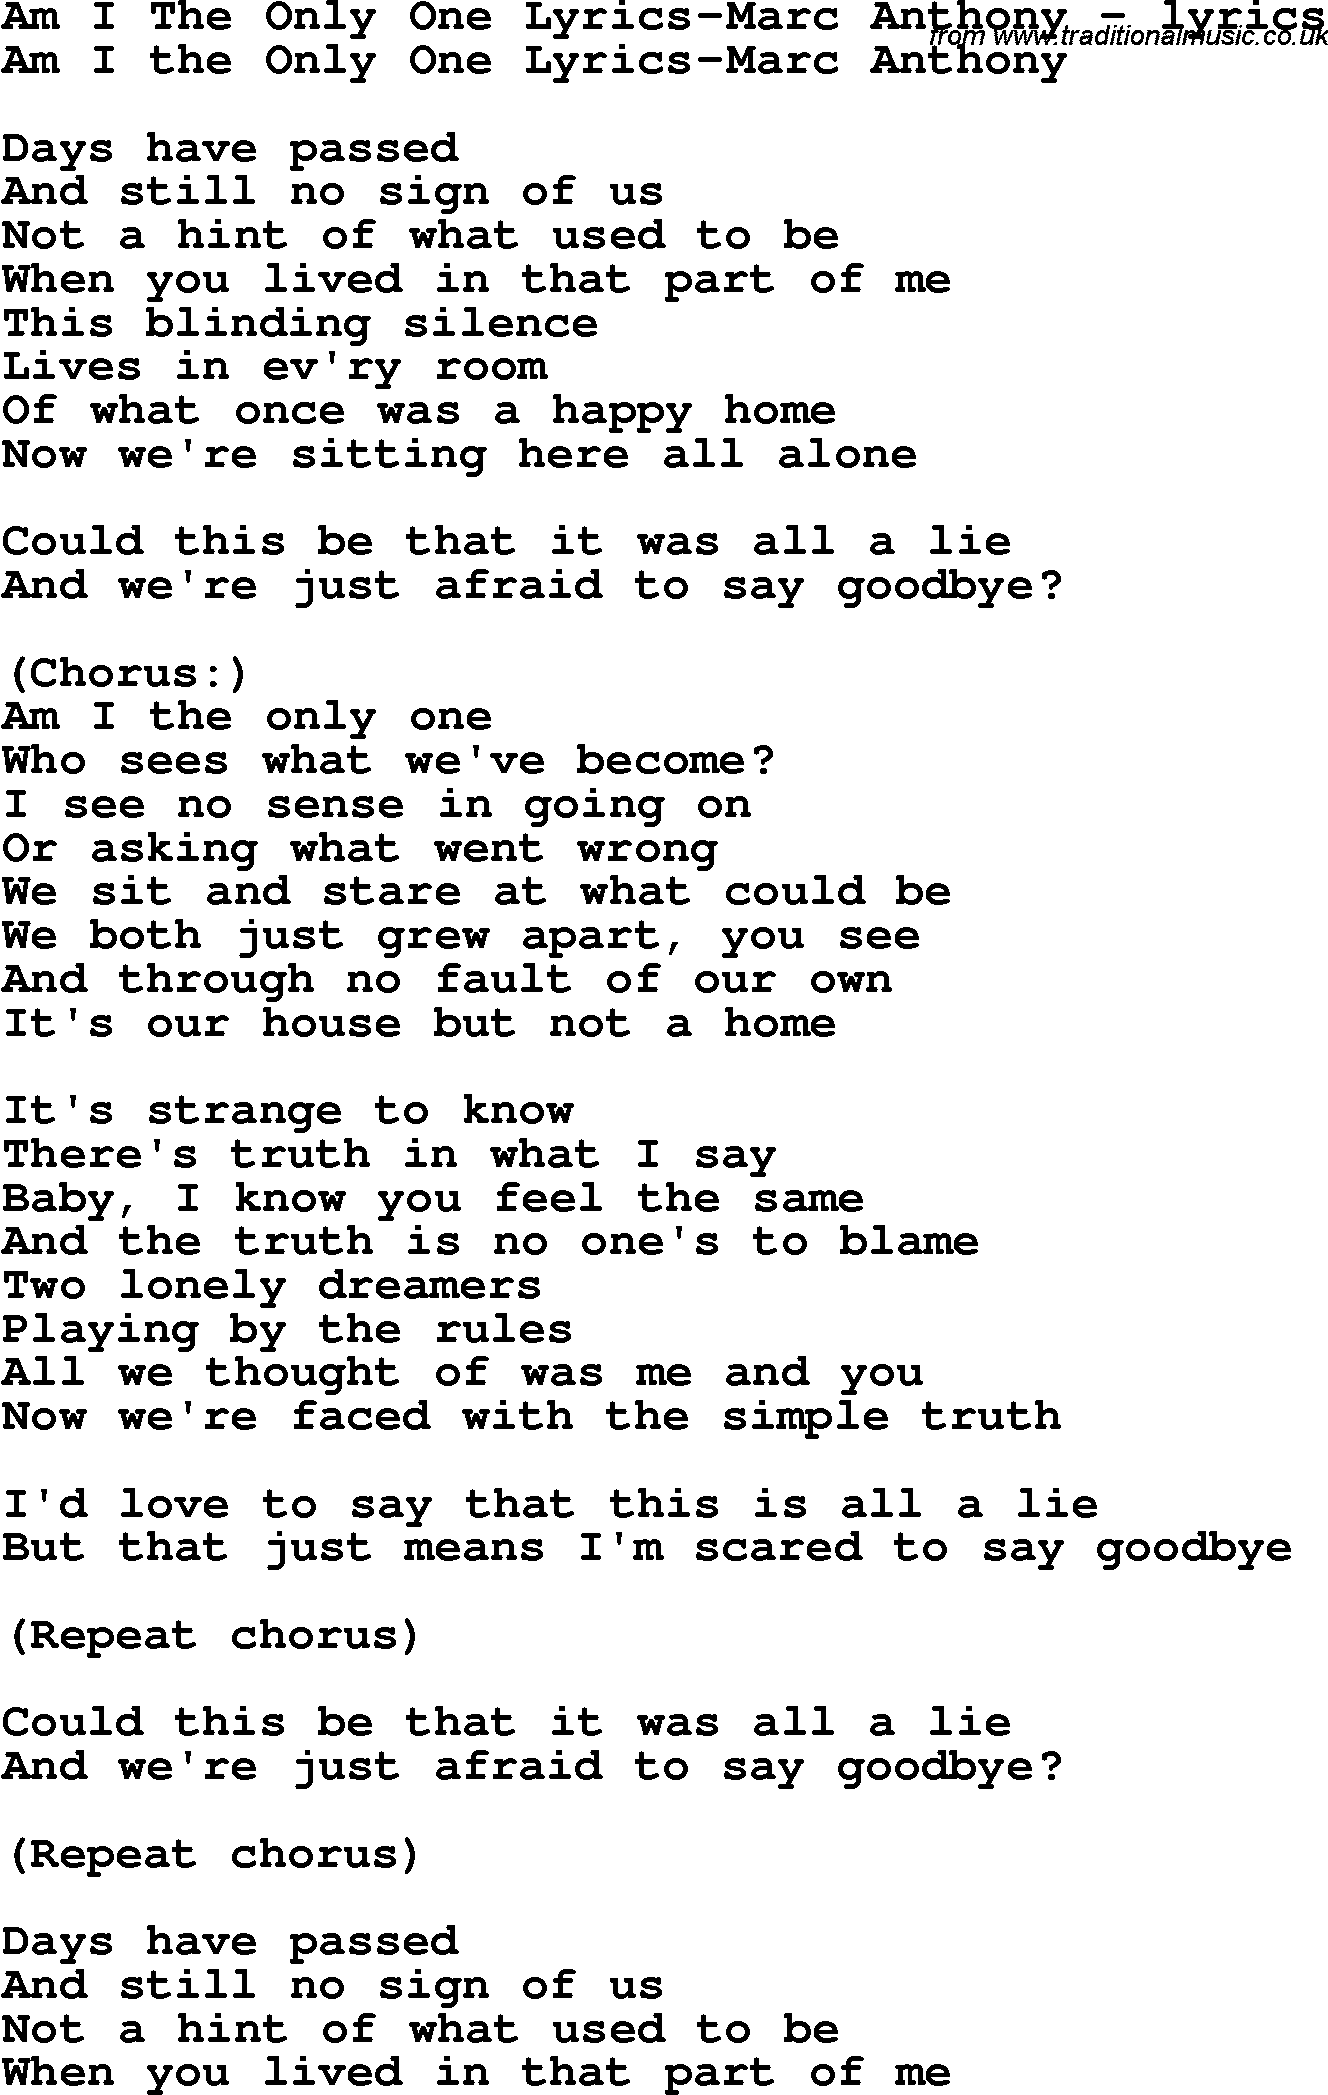 Love Song Lyrics for: Am I The Only One Lyrics-Marc Anthony